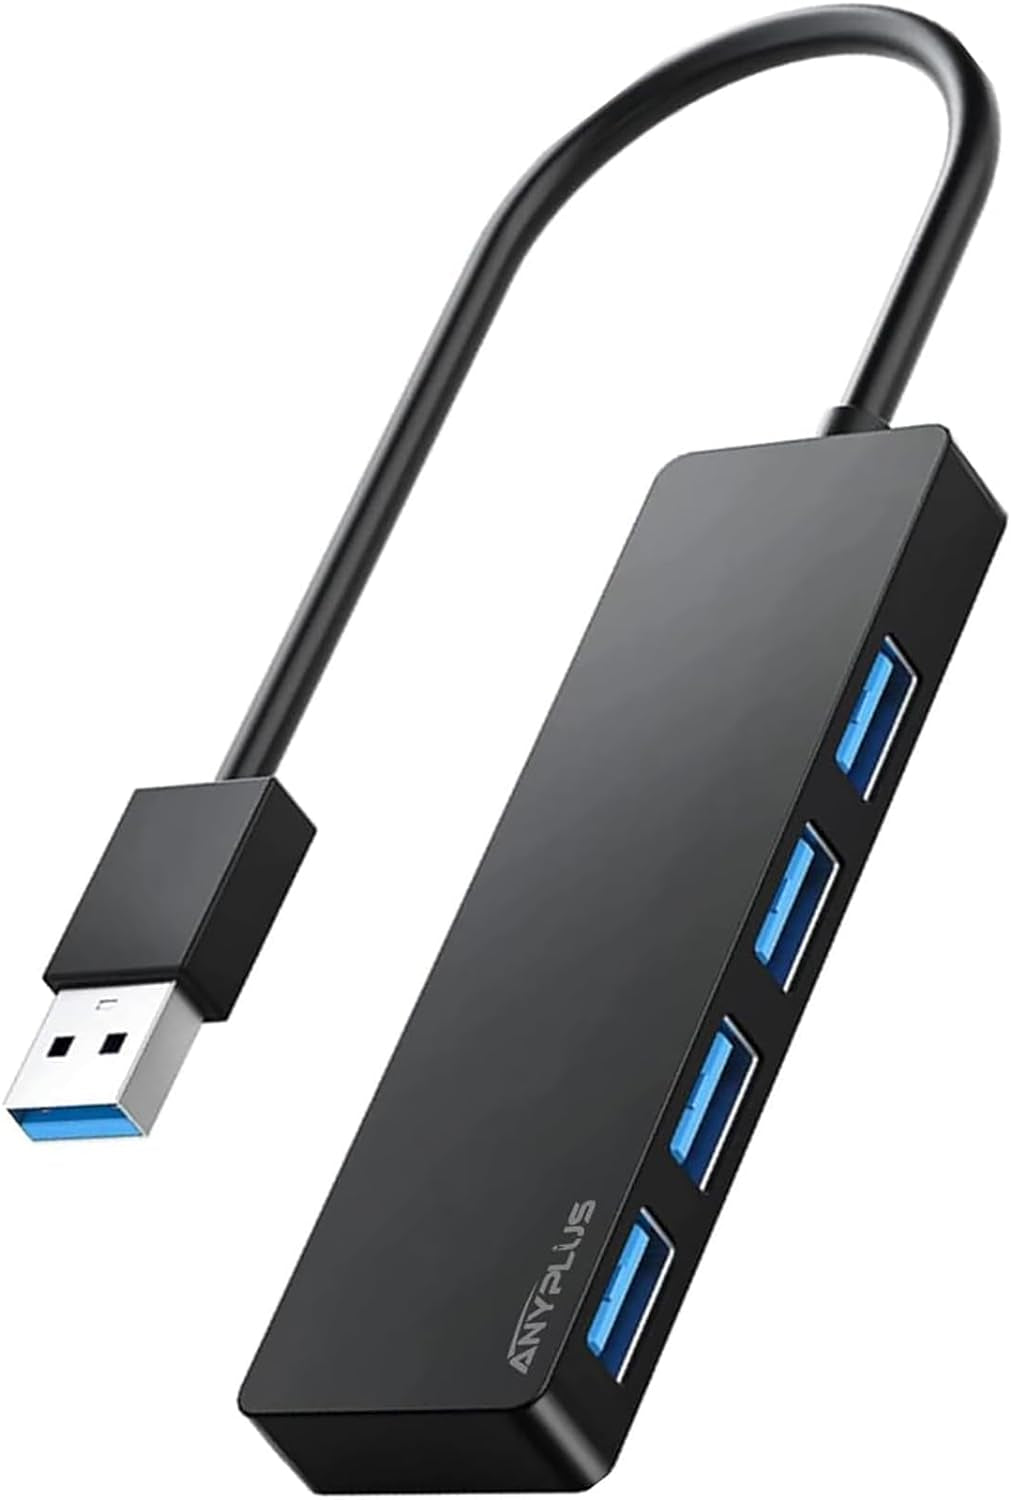 USB 3.0 Hub, 4 Port USB Hub Splitter,Portable USB Adapter Mini Multiport Expander for Desktop, Laptop, Xbox, Flash Drive, HDD, Console, Printer, PC, Keyboards, HP, Dell